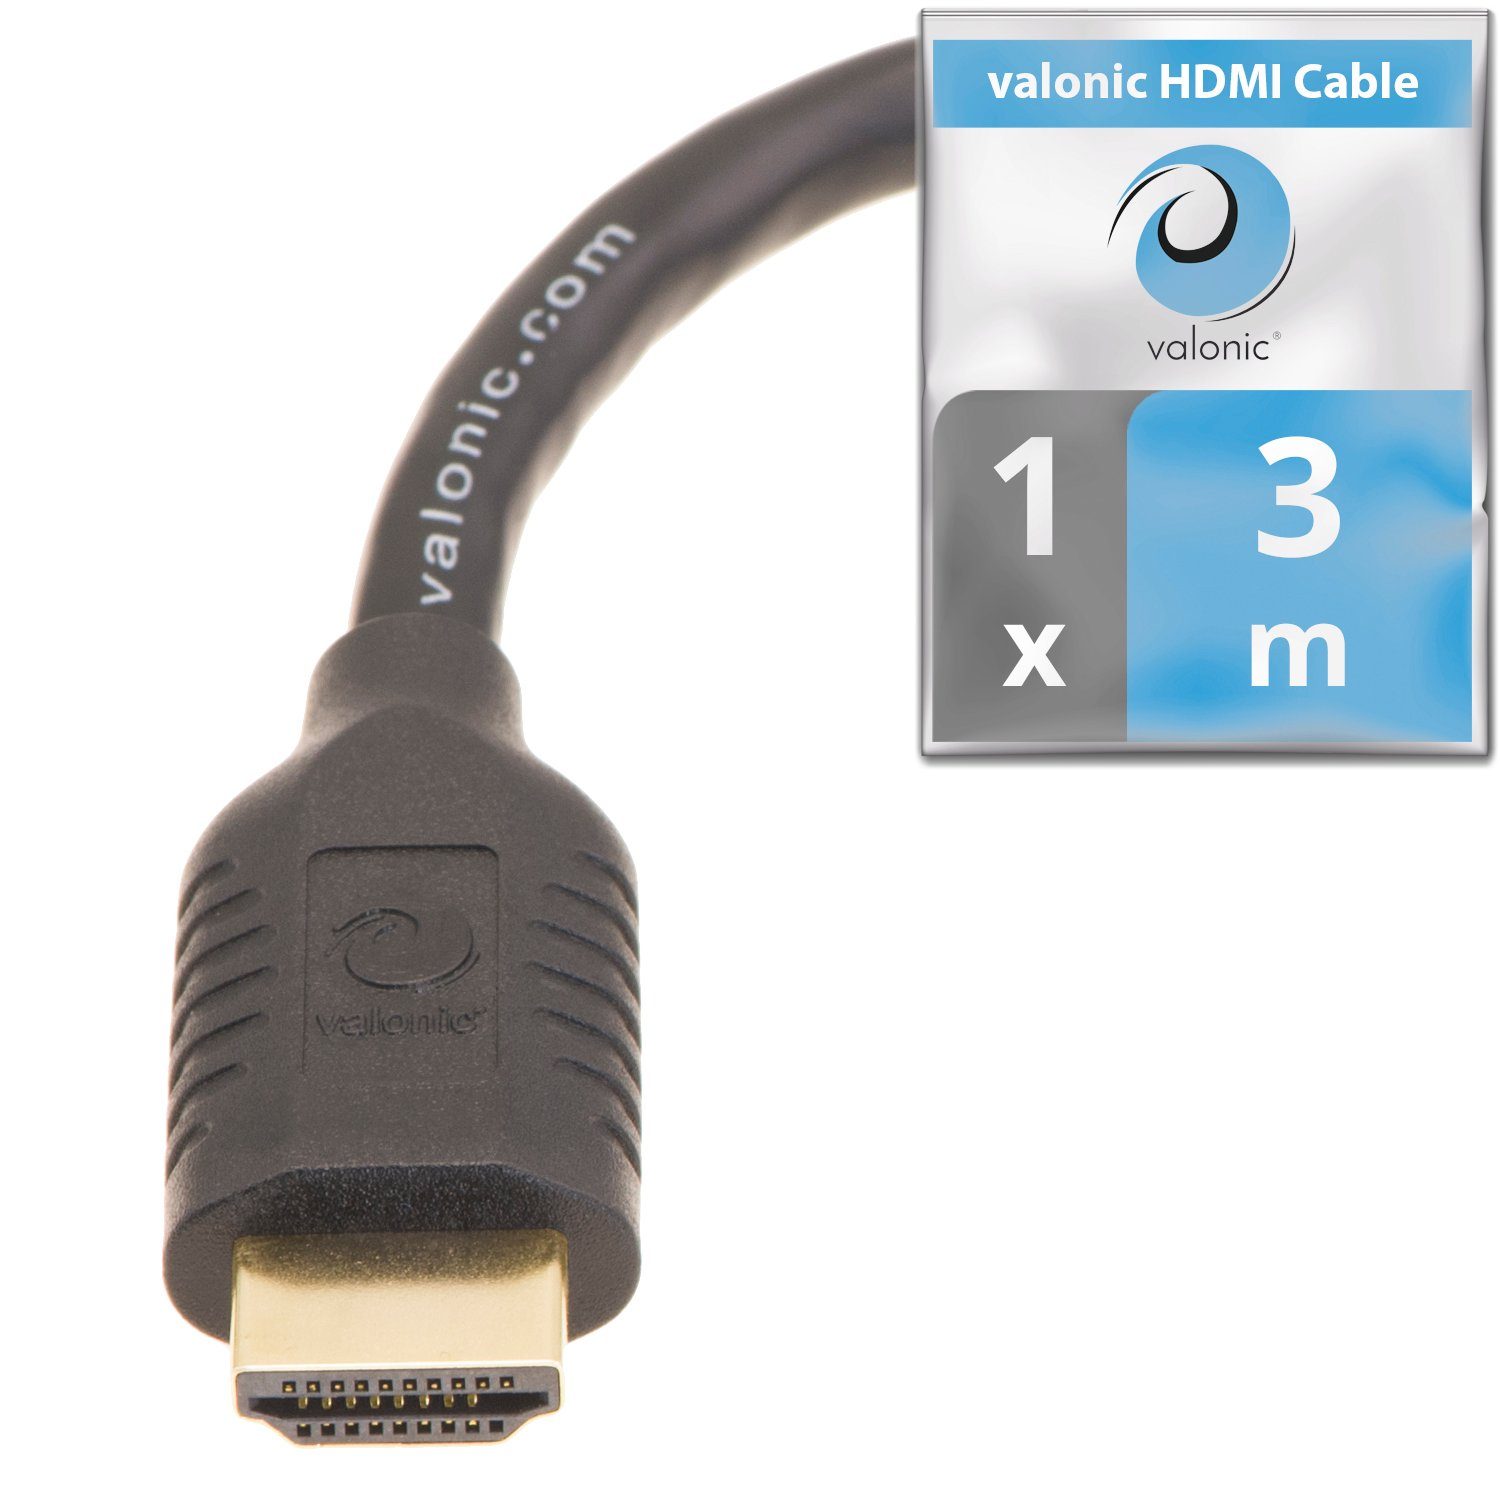 HDMI-Kabel, HDMI (300 cm), valonic HDMI Full HD, A A, Typ valonic 3m, HDMI Kabel, Typ - Ethernet HDMI